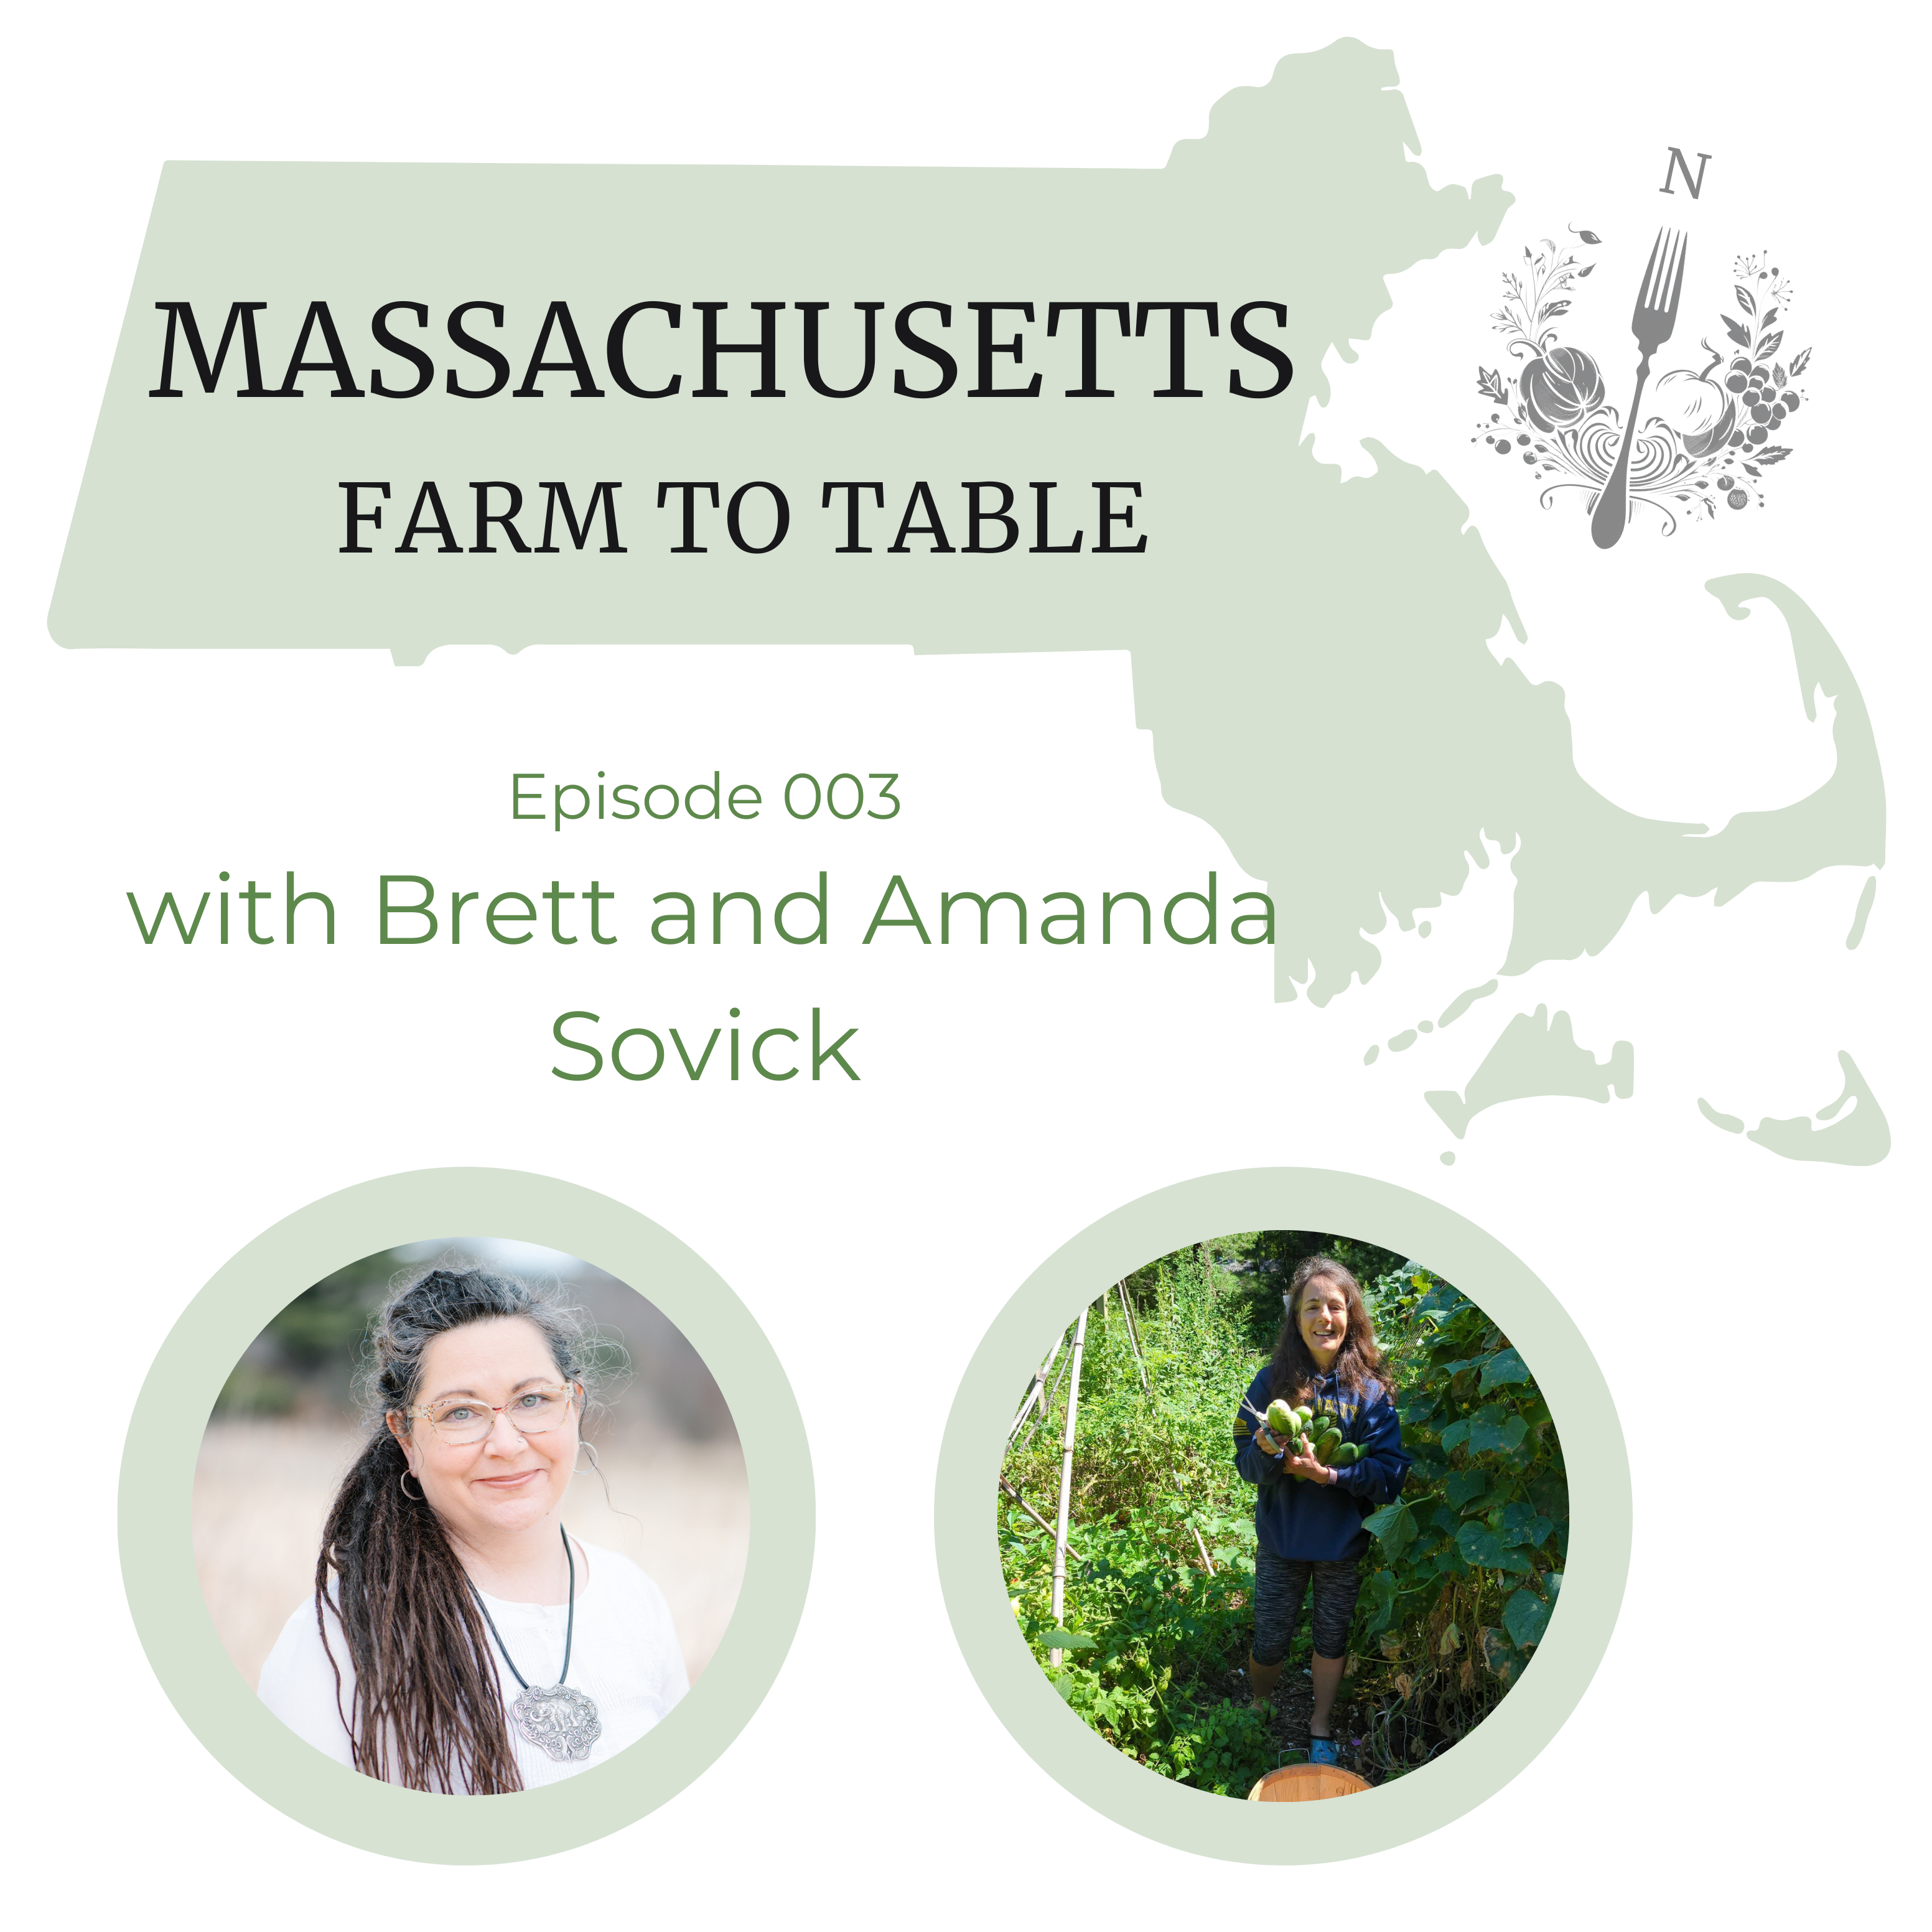 Massachusetts Farm to Table Podcast, Episode 003: Amanda and Brett Sovick of DeLorenzo Farm